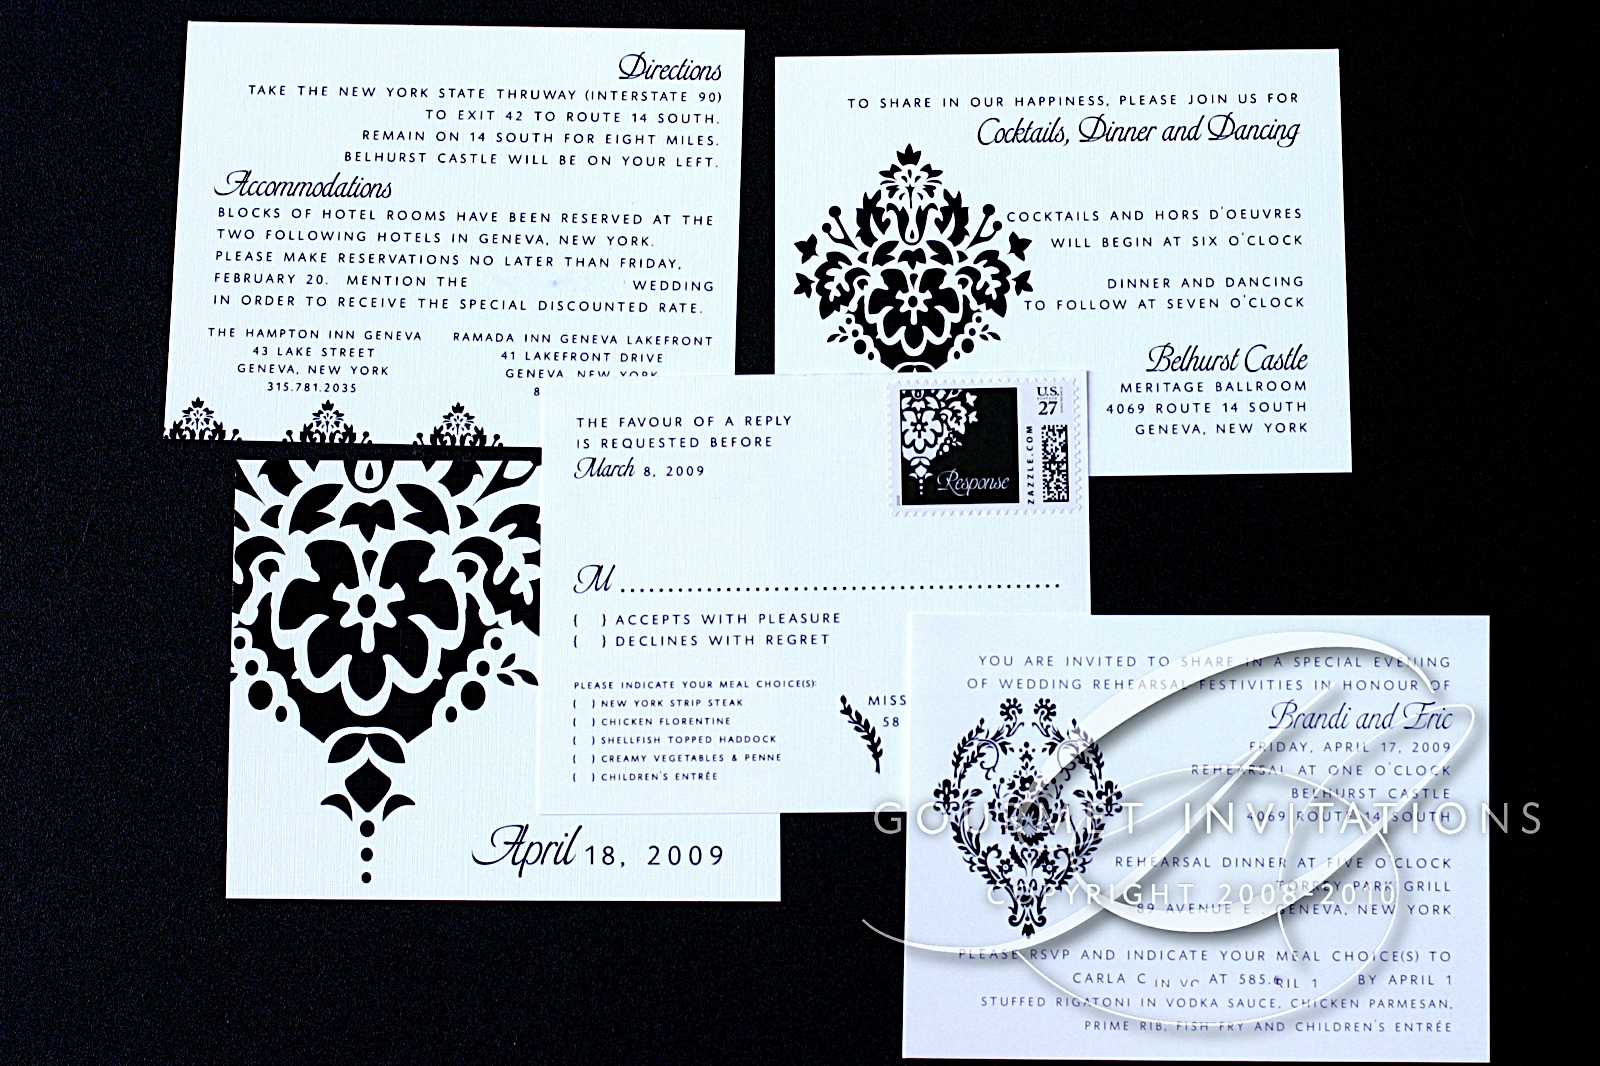 diy wedding invitation ideas